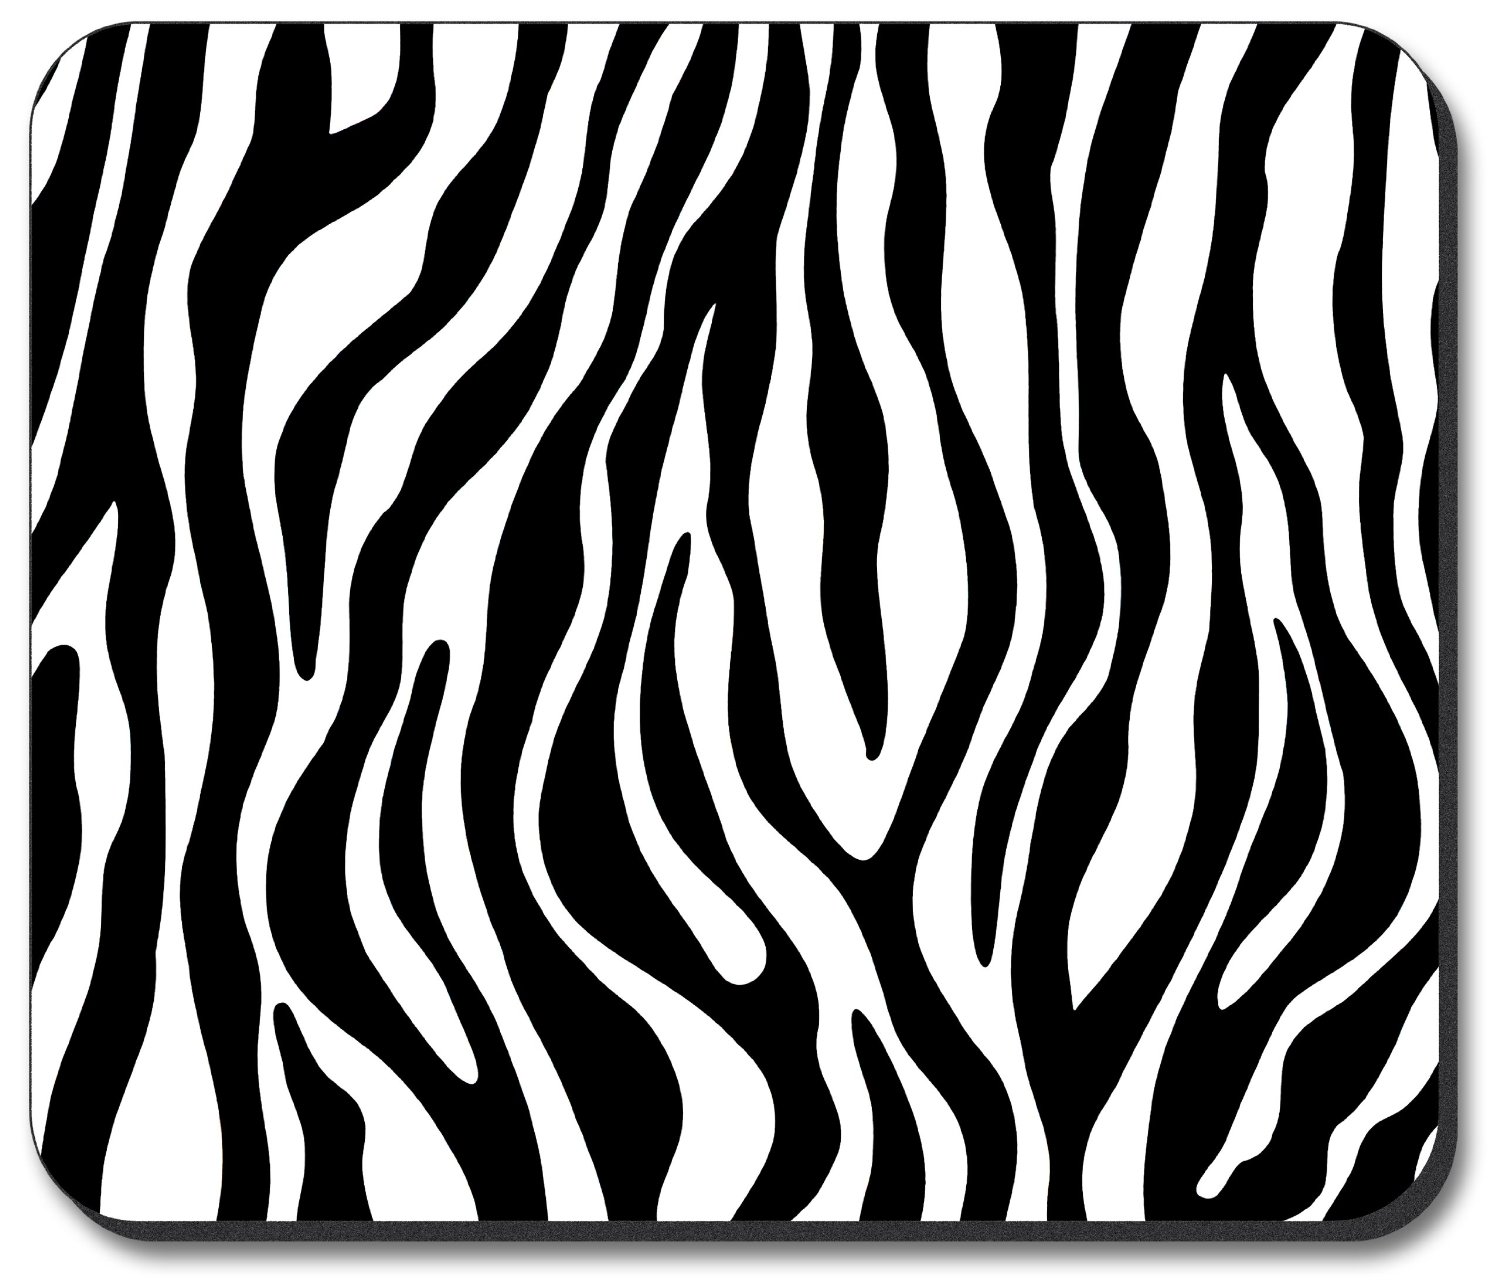 Zebra Print Clipart Free Download Clip Art.